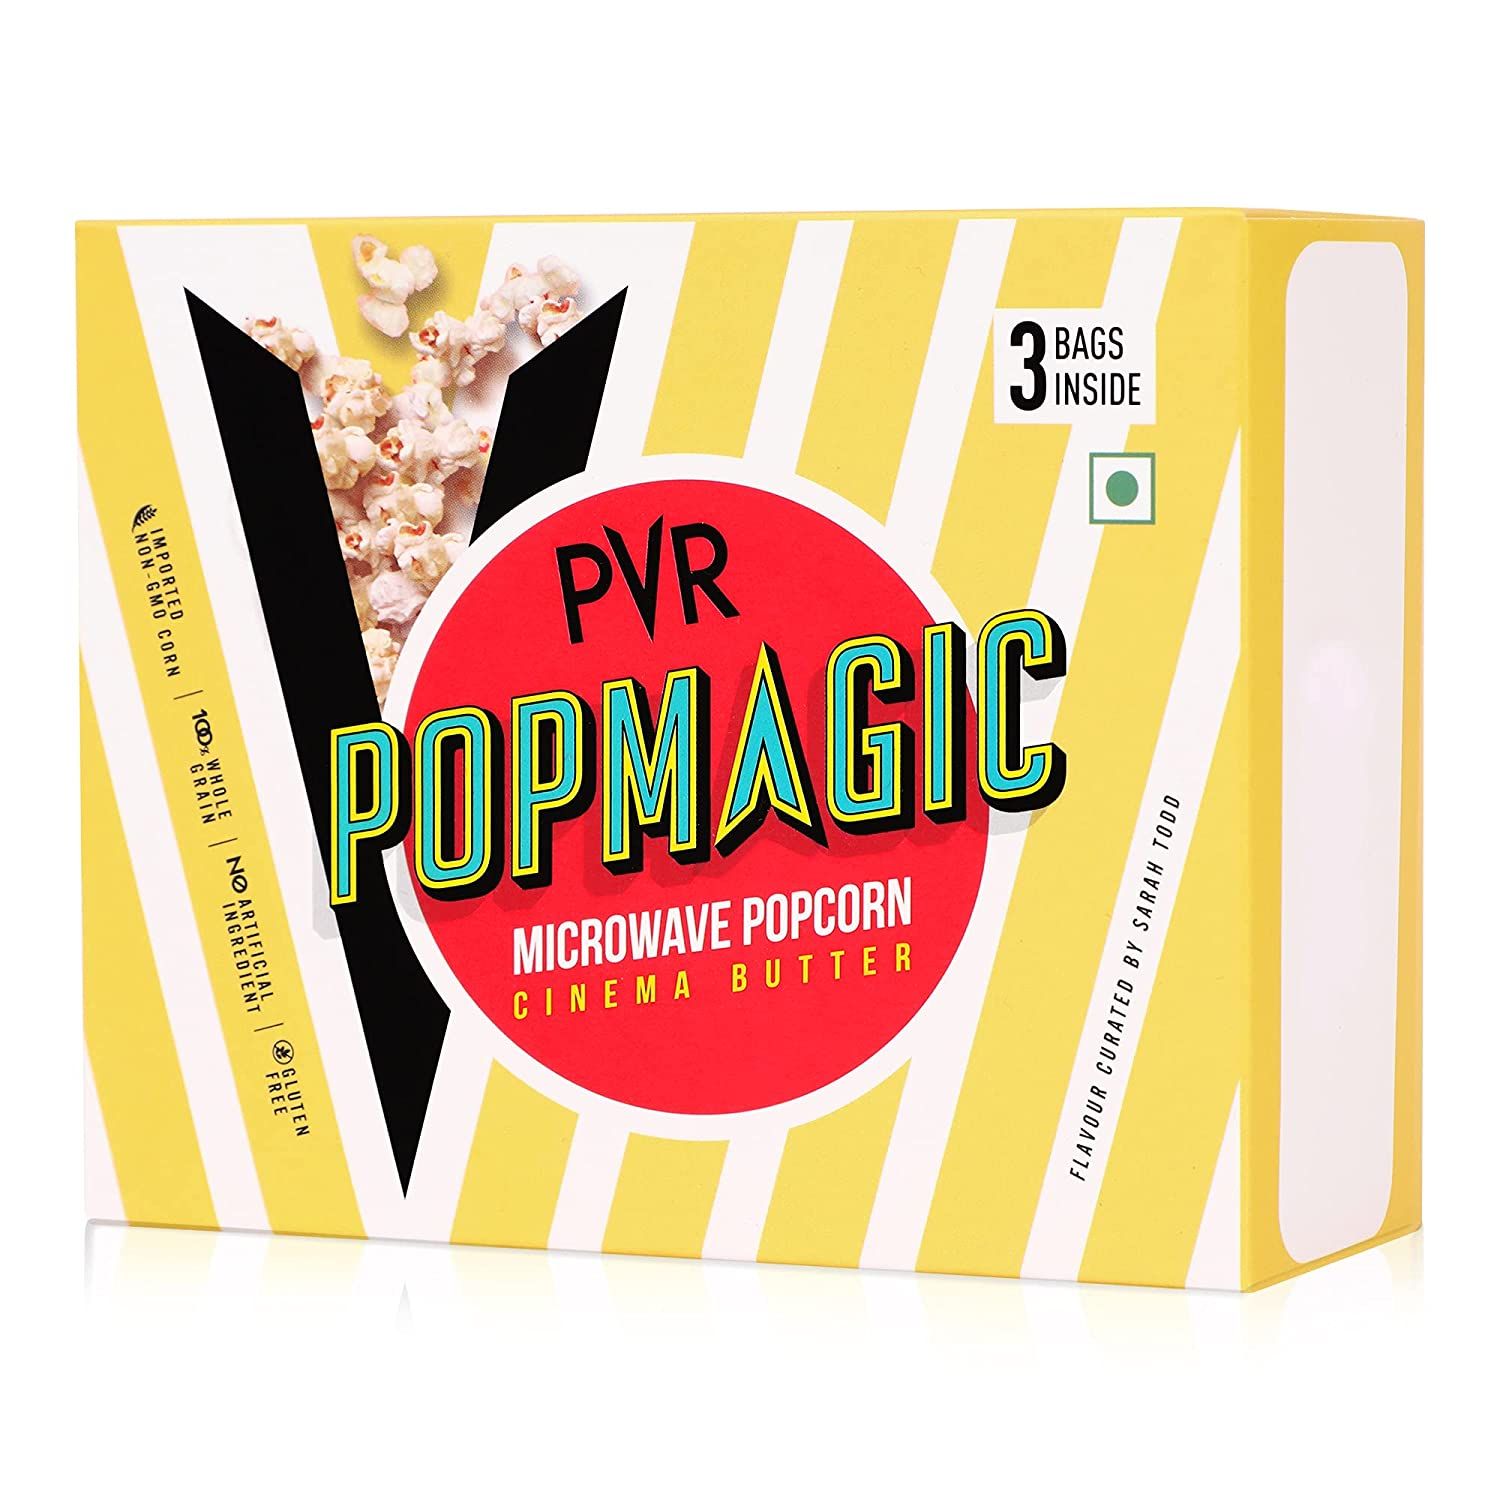 PVR PopMagic Microwave Popcorn Cinema Butter Image